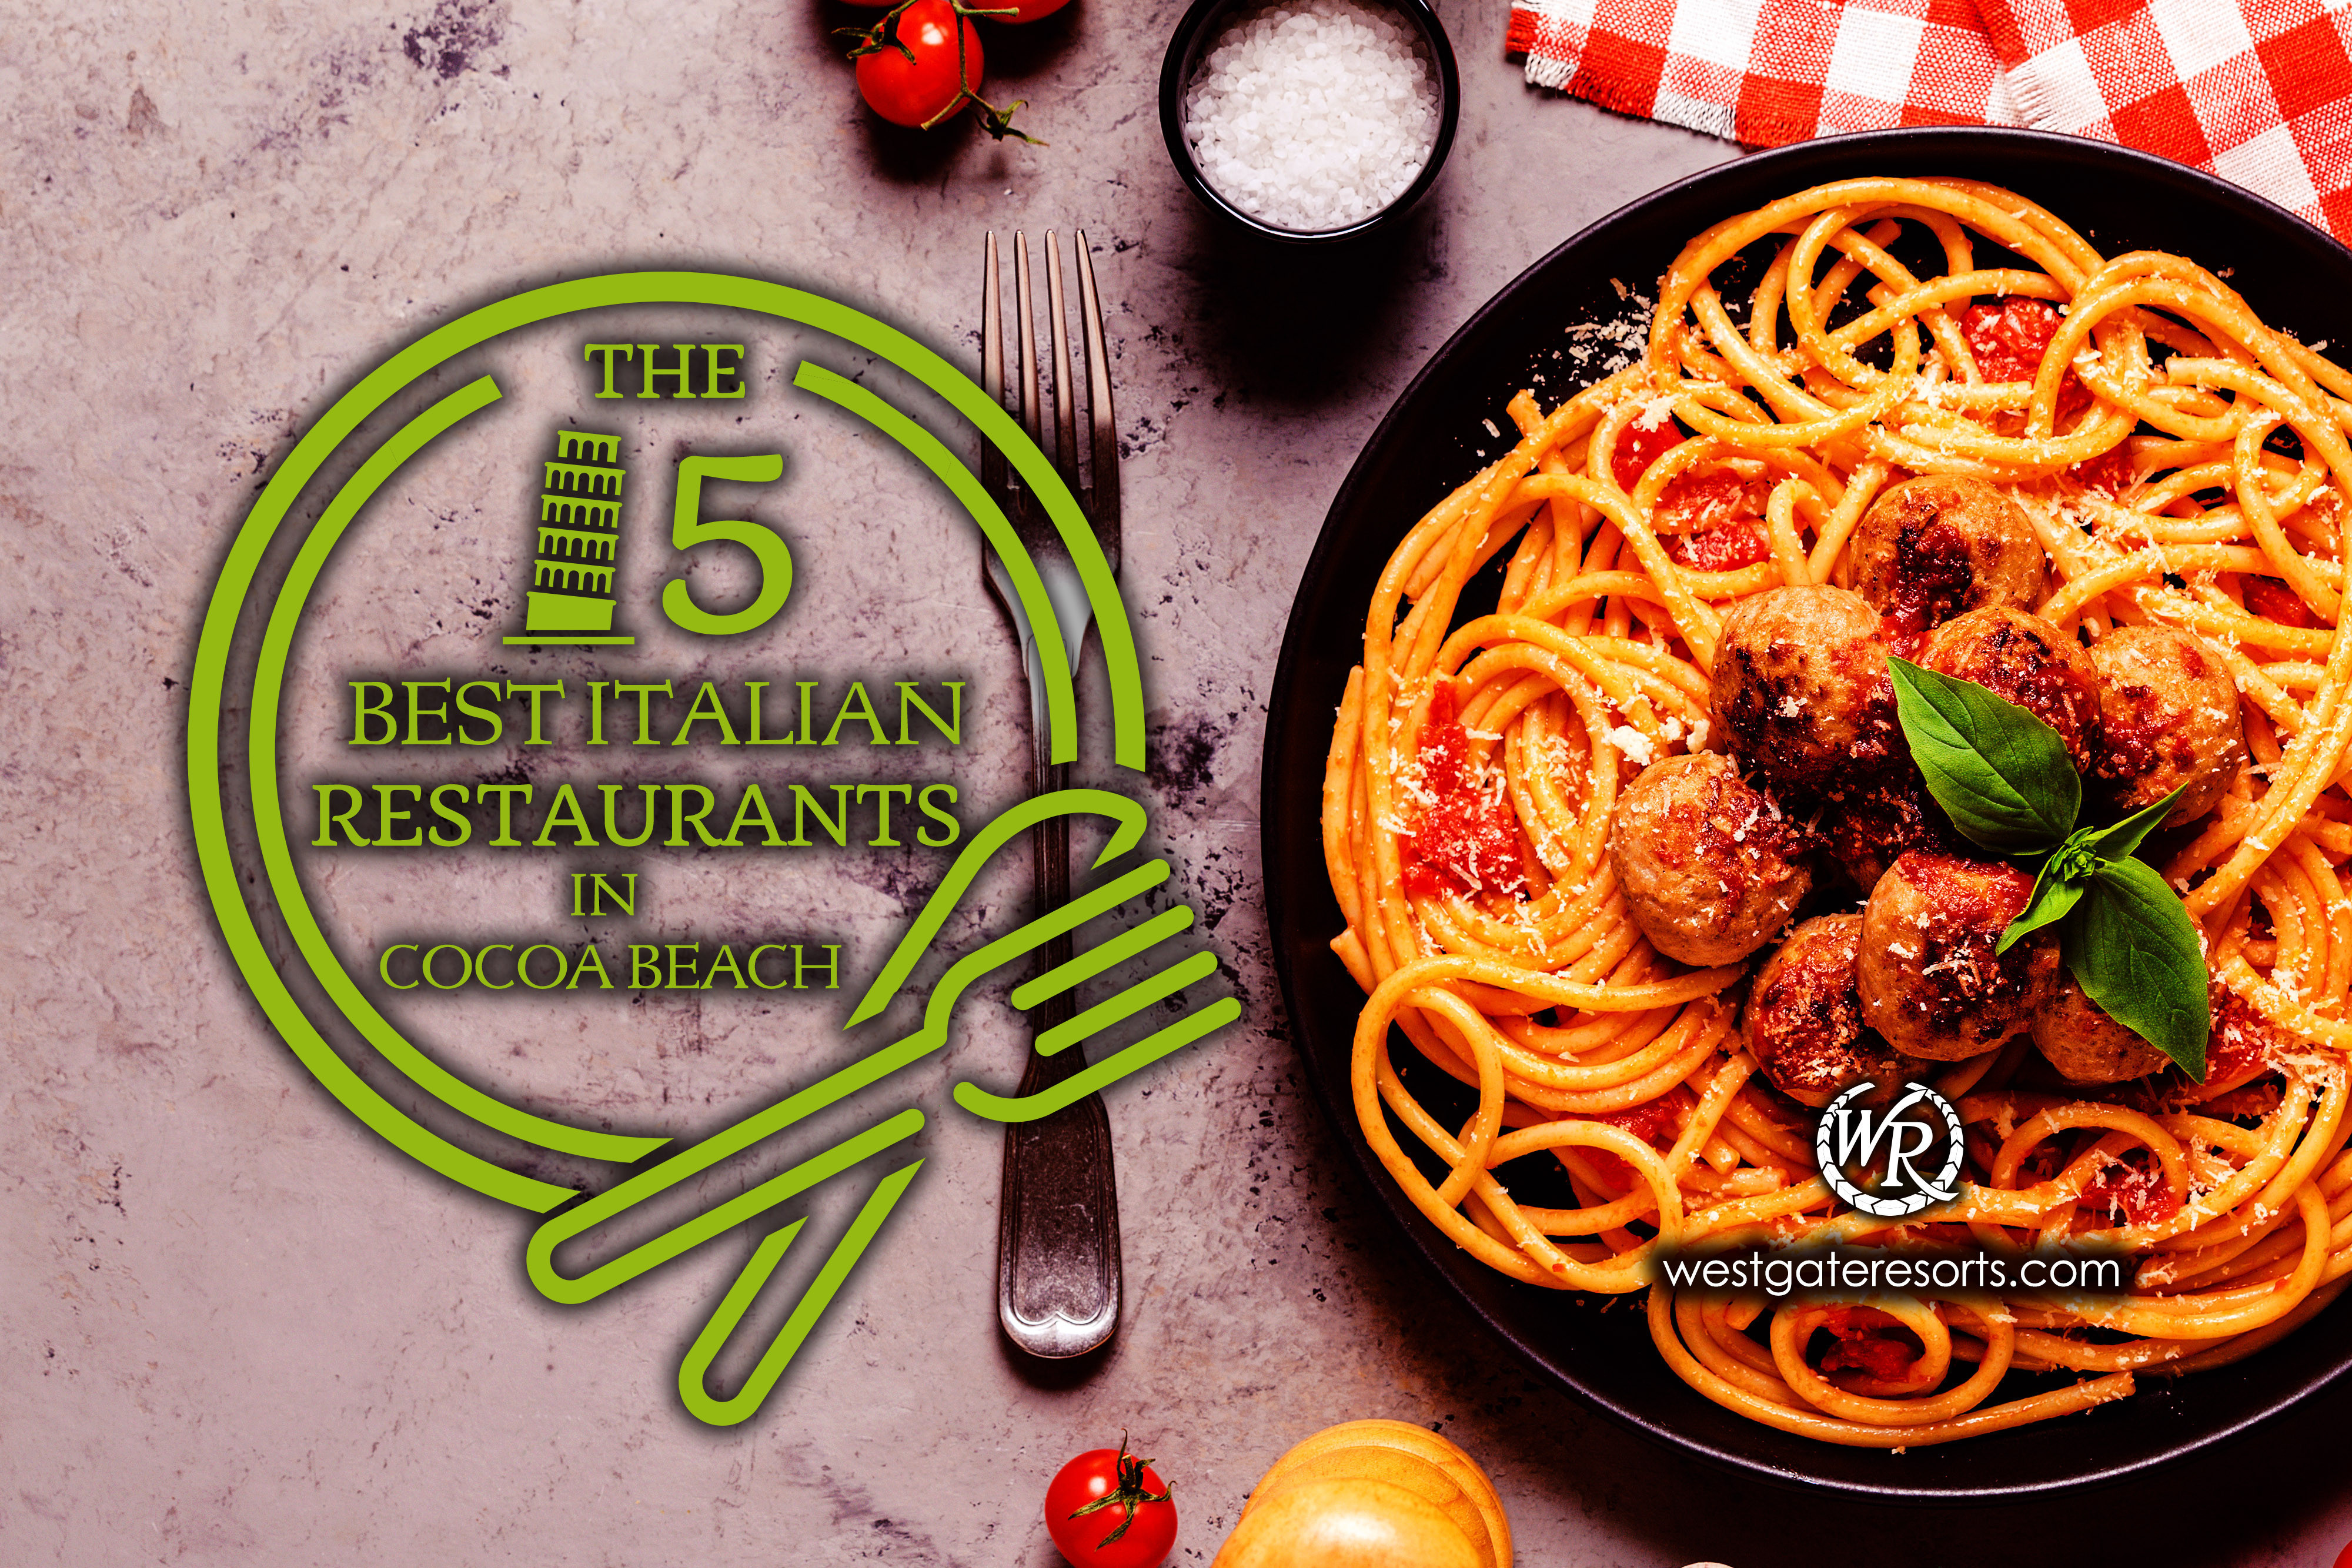 The 15 Best Italian Restaurants in Cocoa Beach